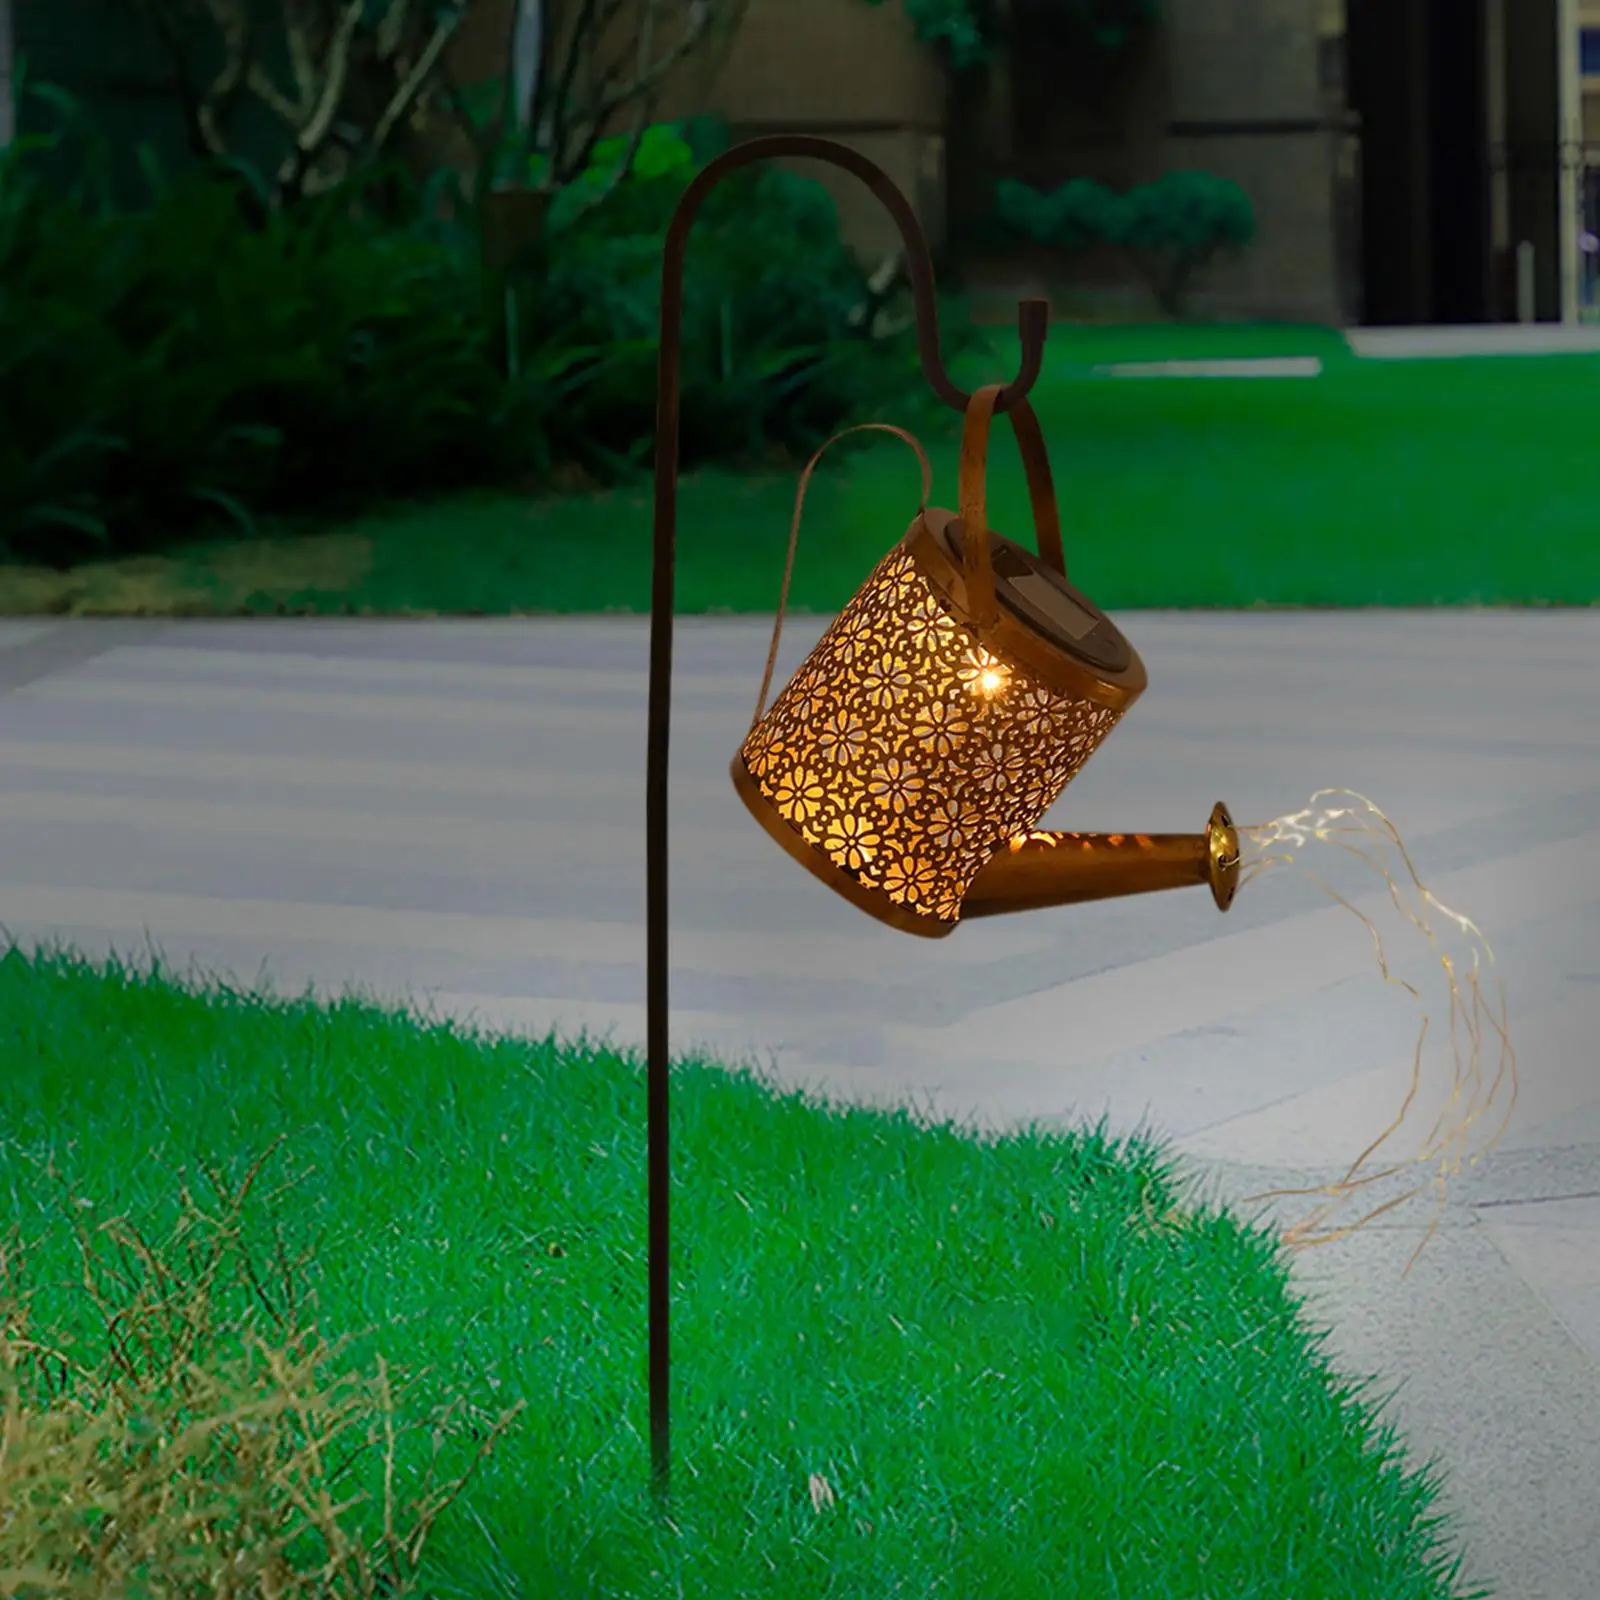 Waterproof Solar Watering Can String Light Kettle Lamps Lantern Waterfall Lamp for Yard Lighting Accessories Gardentree Ornament